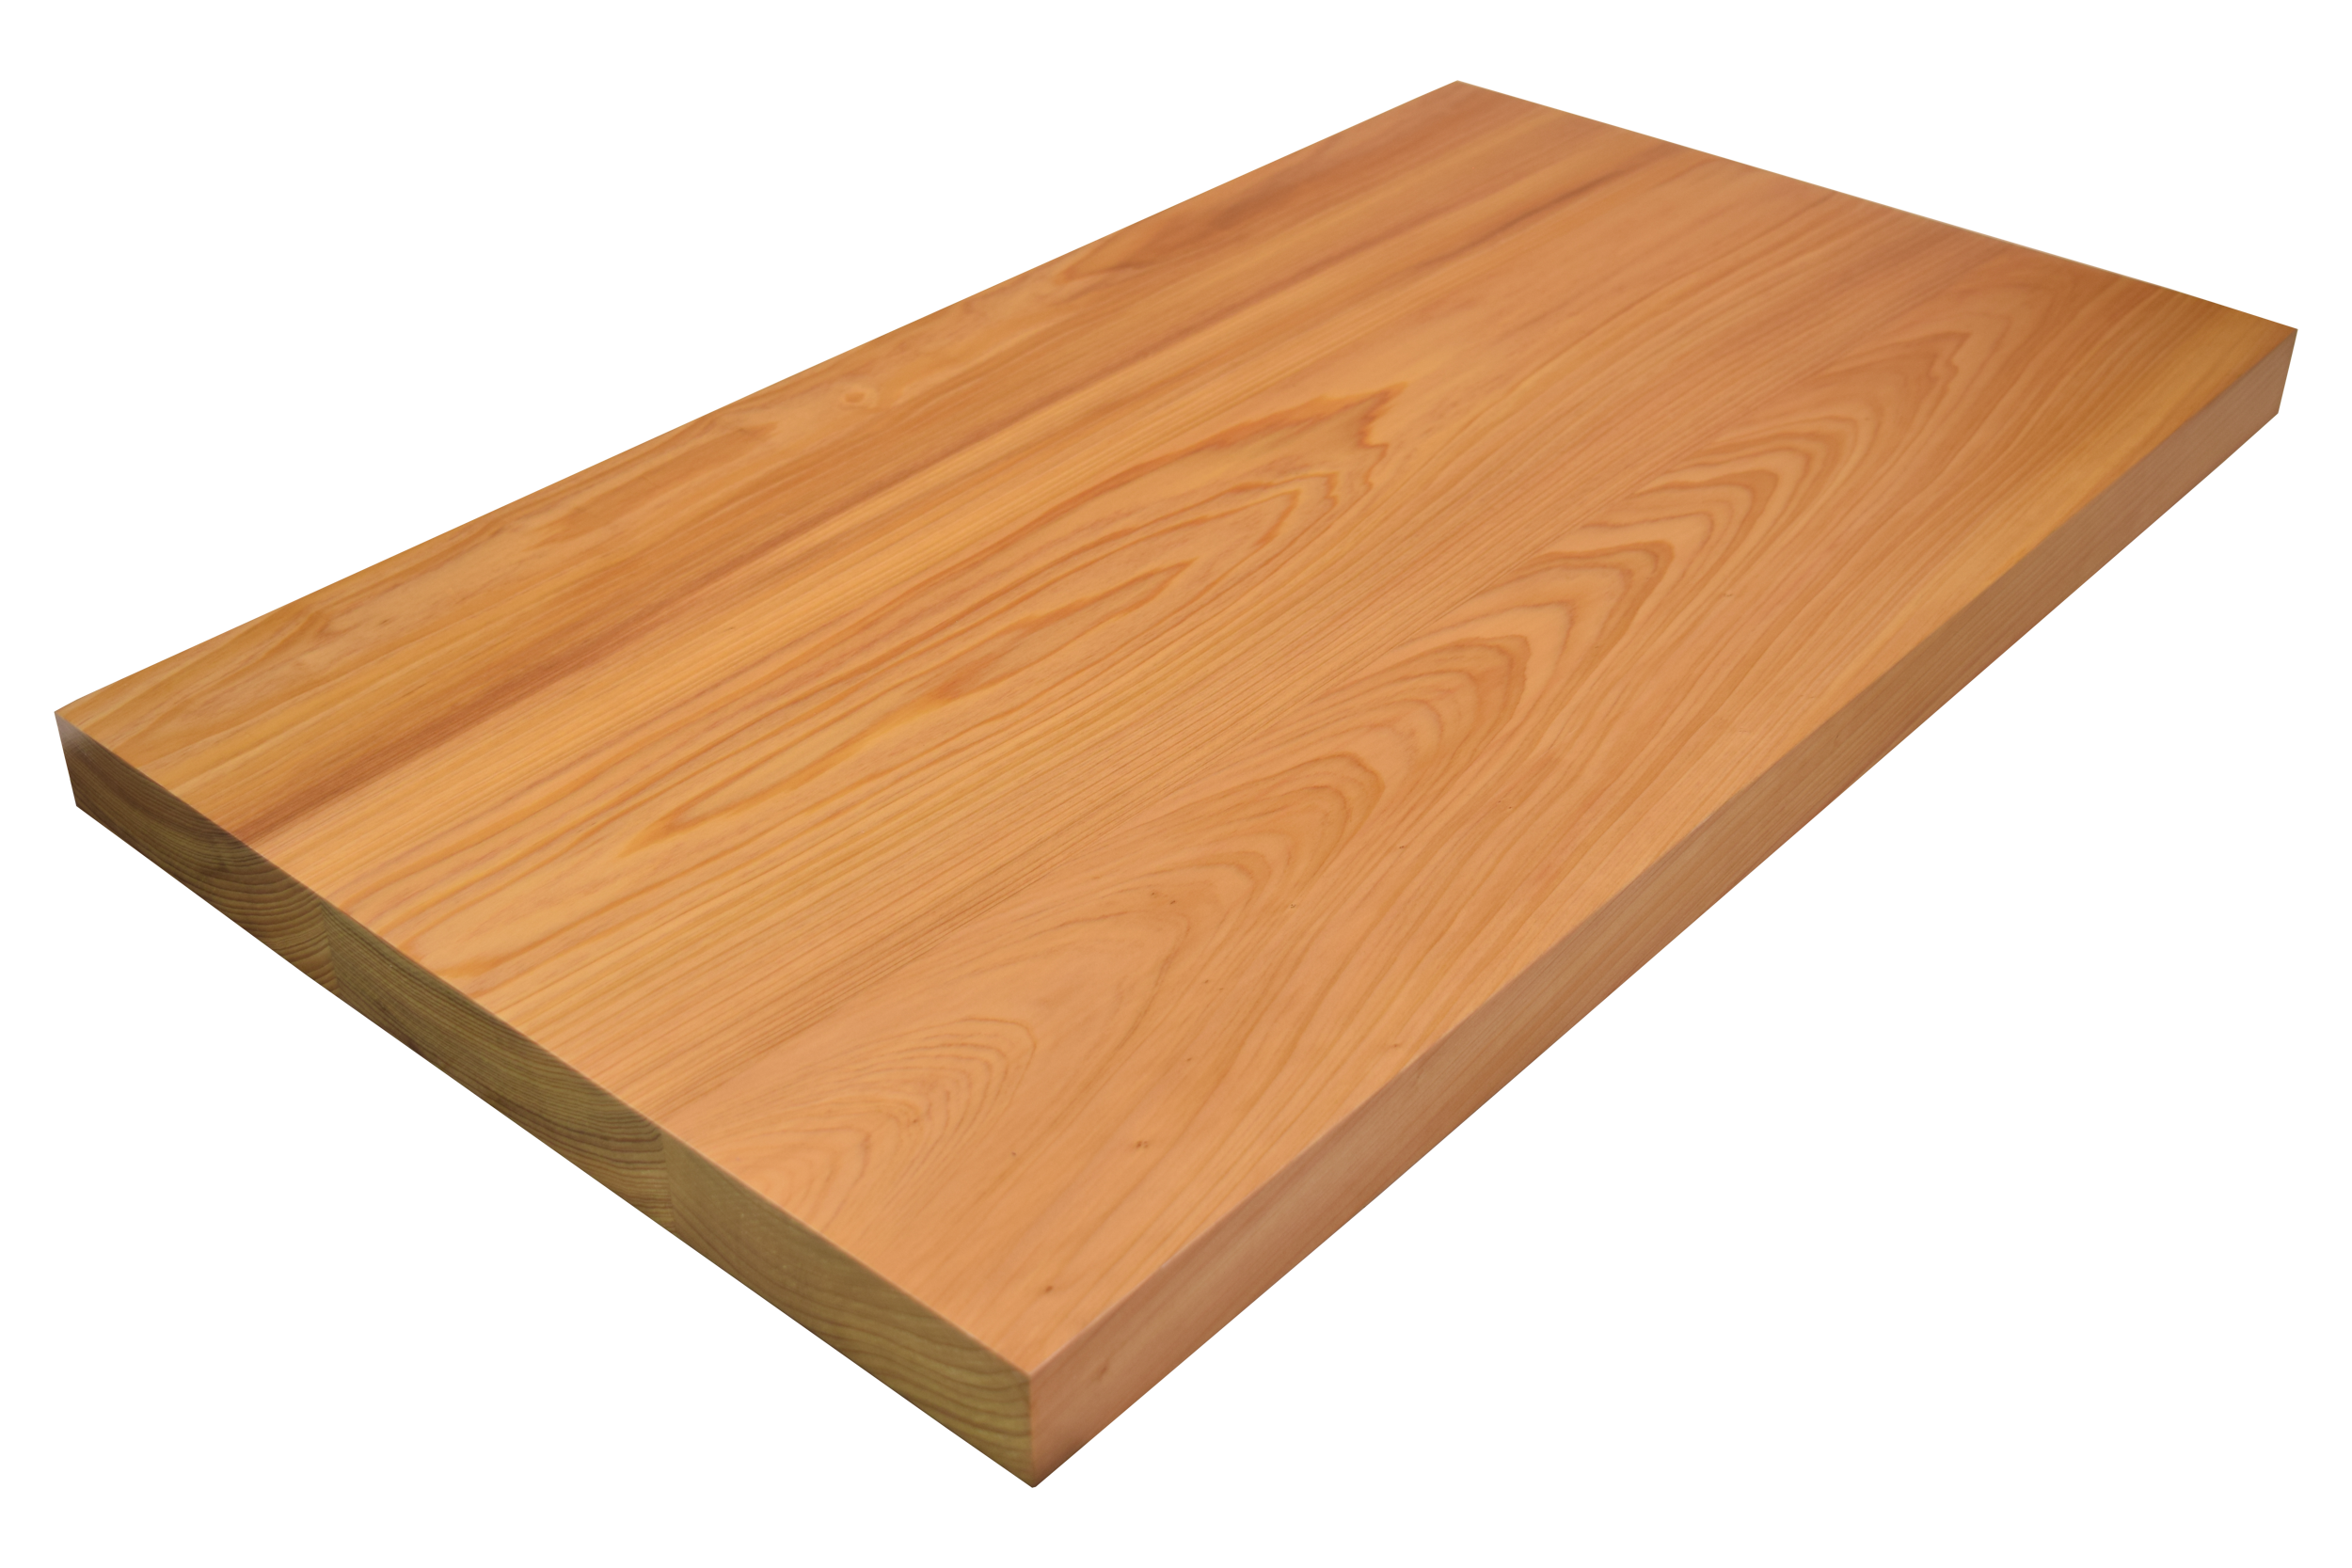 Premium Walnut Wide Plank (Face Grain) Countertop